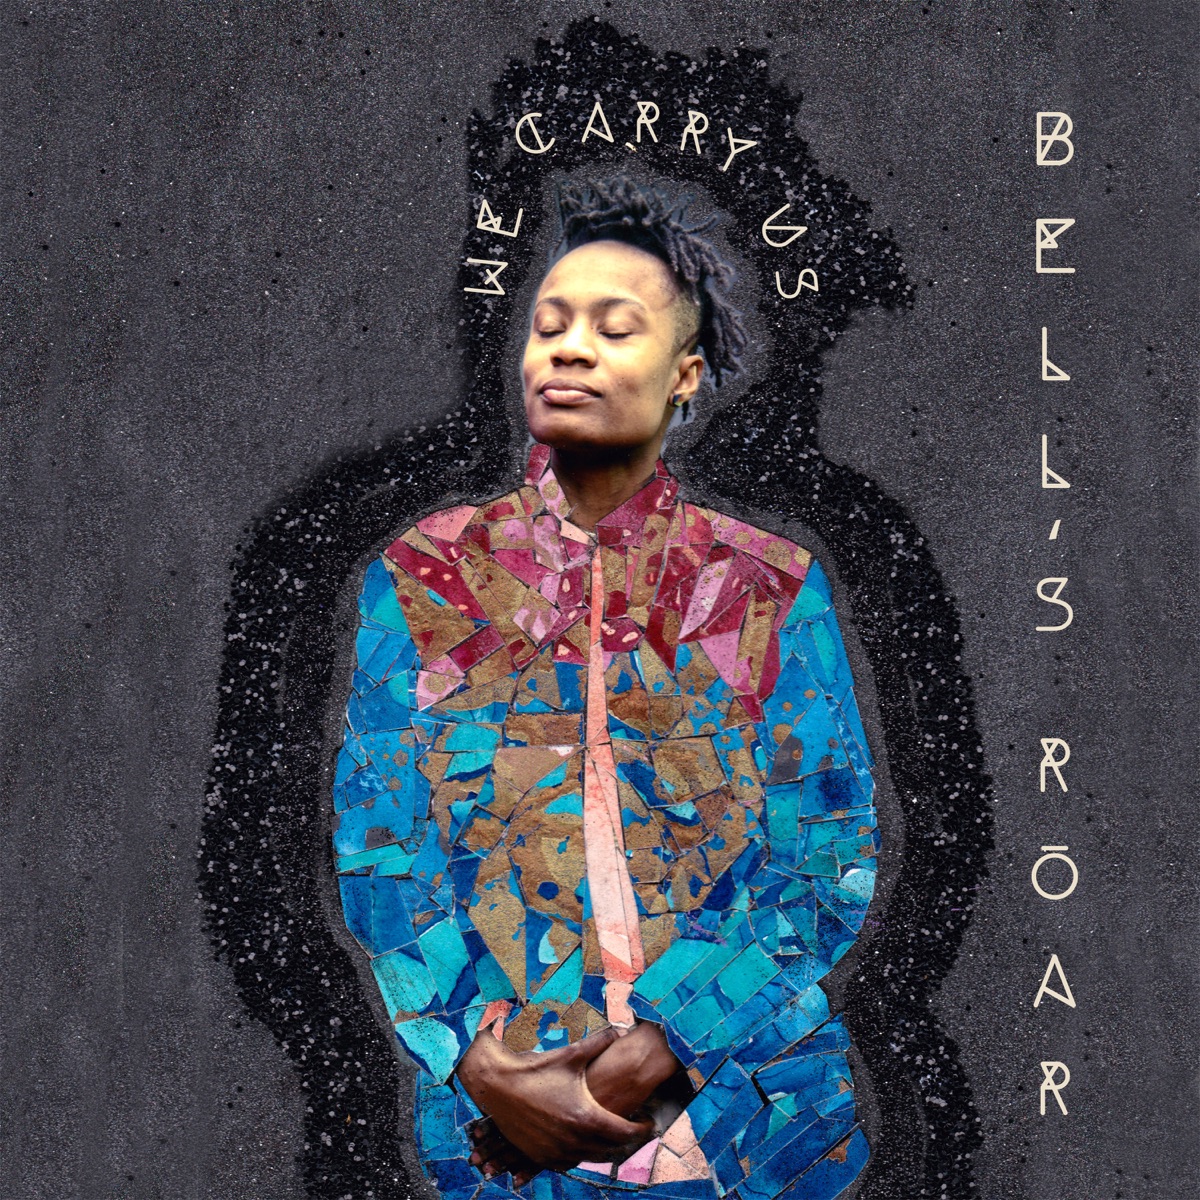 We Carry Us - Album by bell's roar